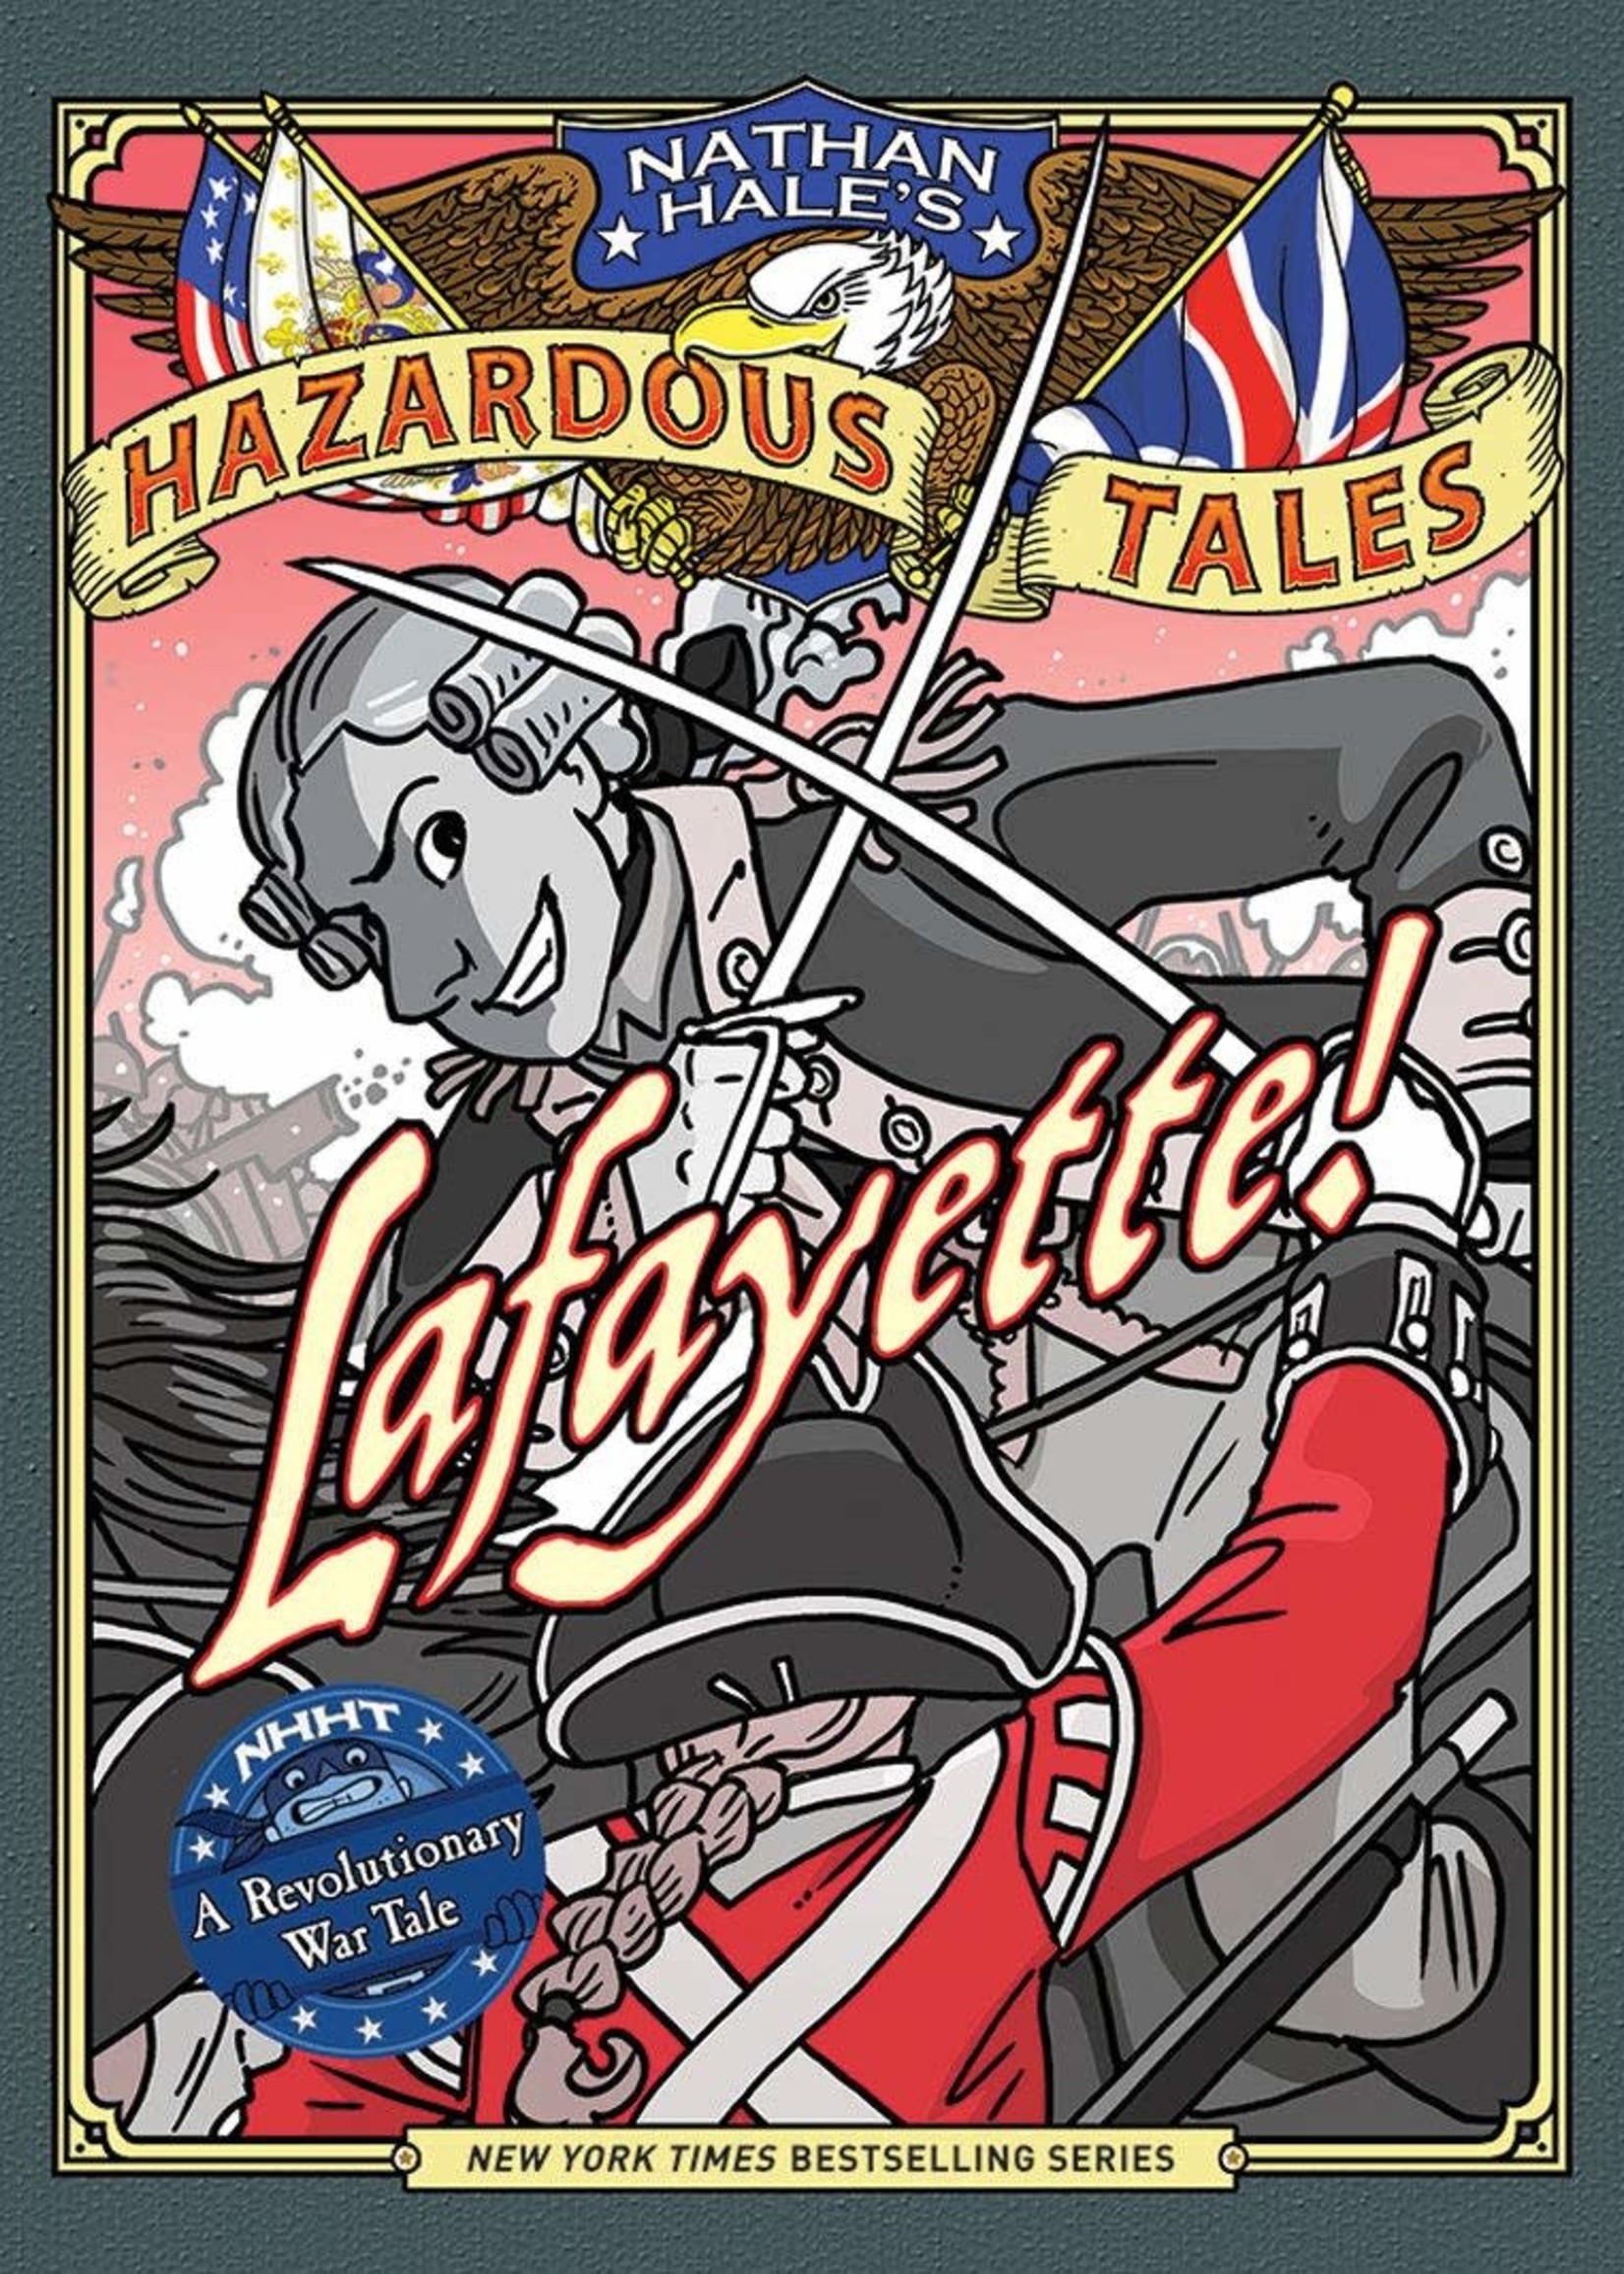 Nathan Hale's Hazardous Tales #08, Lafayette!: A Revolutionary War Tale GN - HC